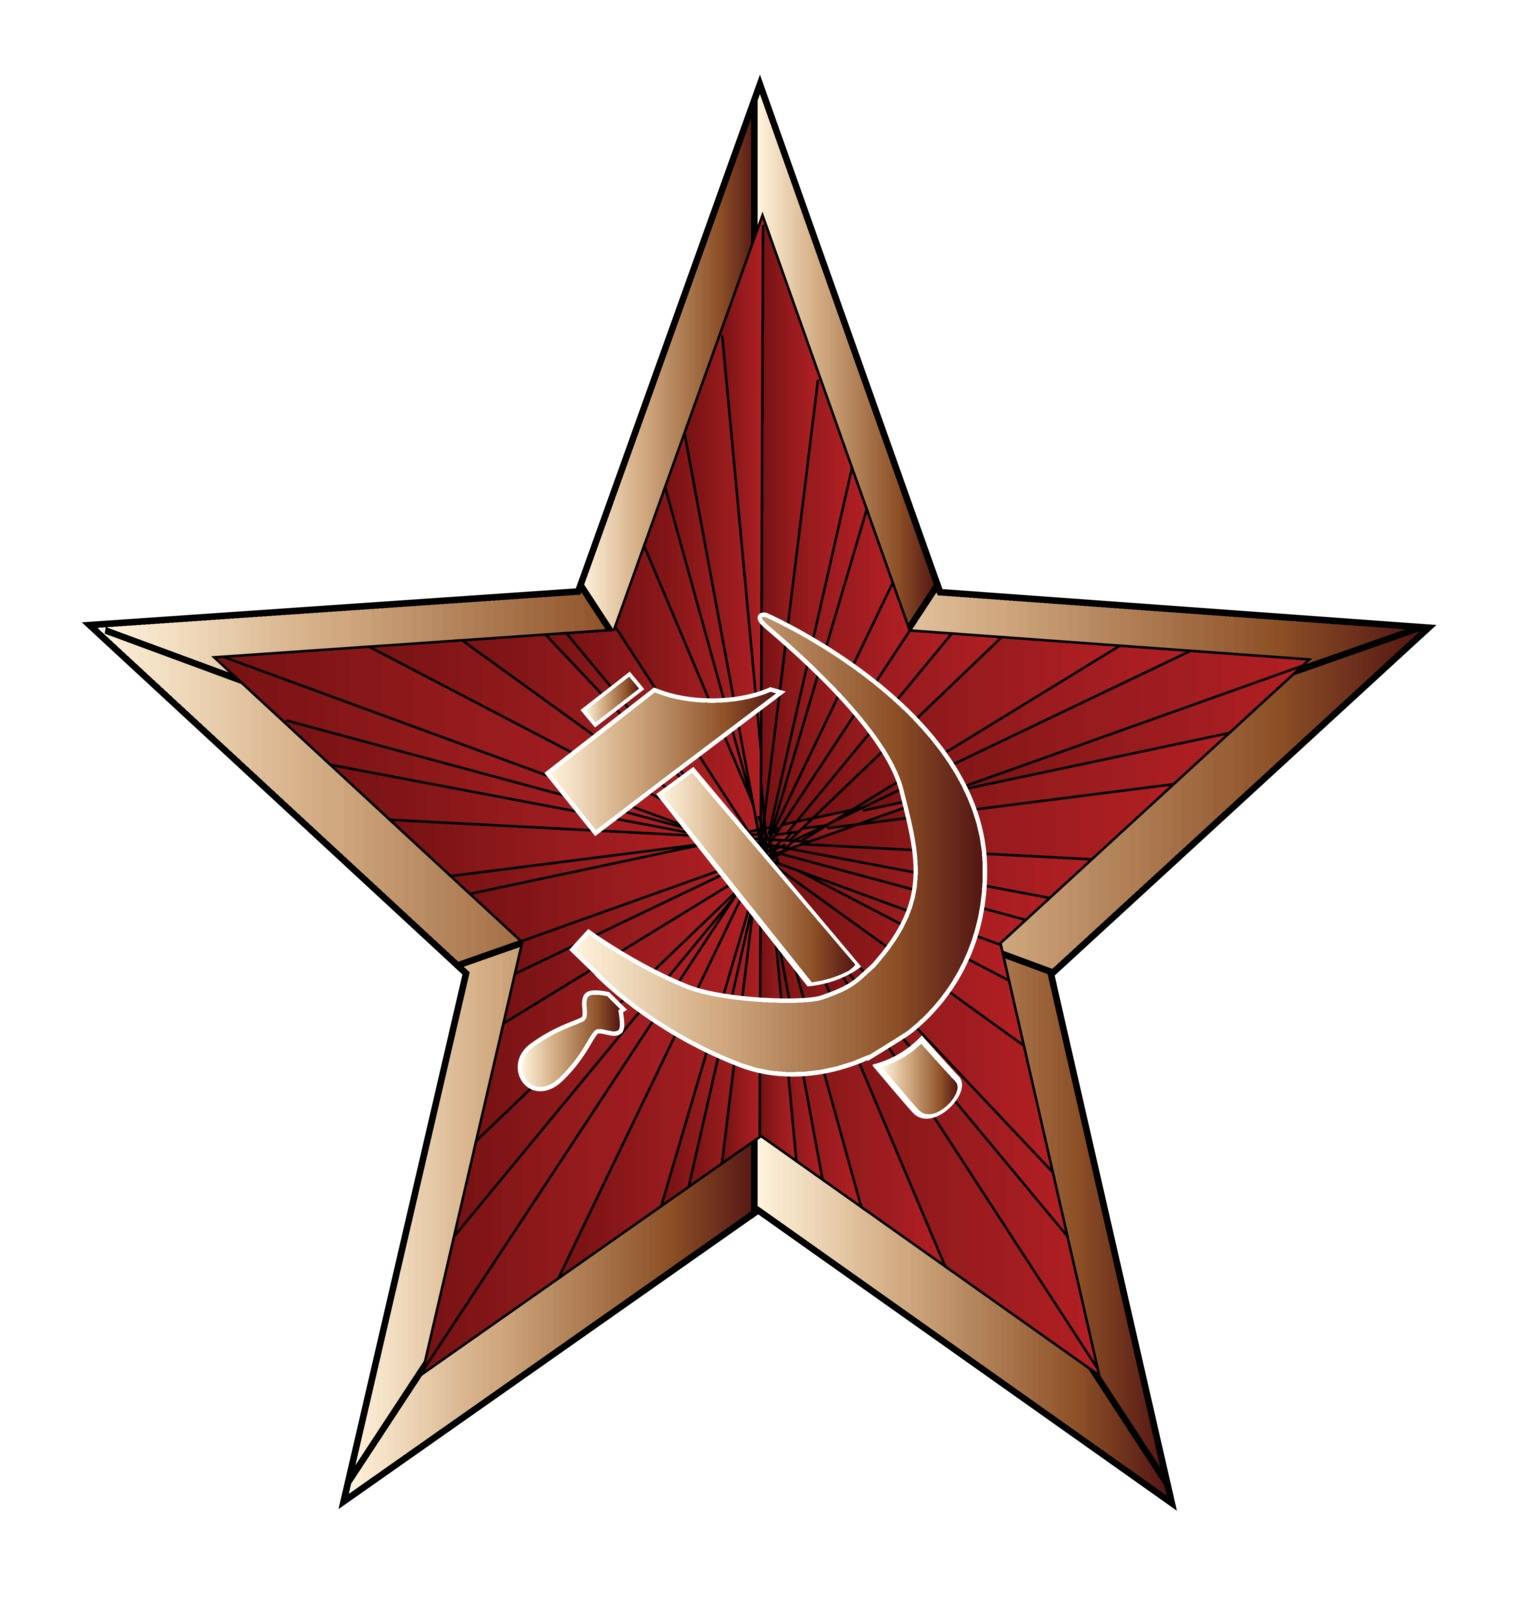 A Russian officer army metal enamel pin cap badge Insignia